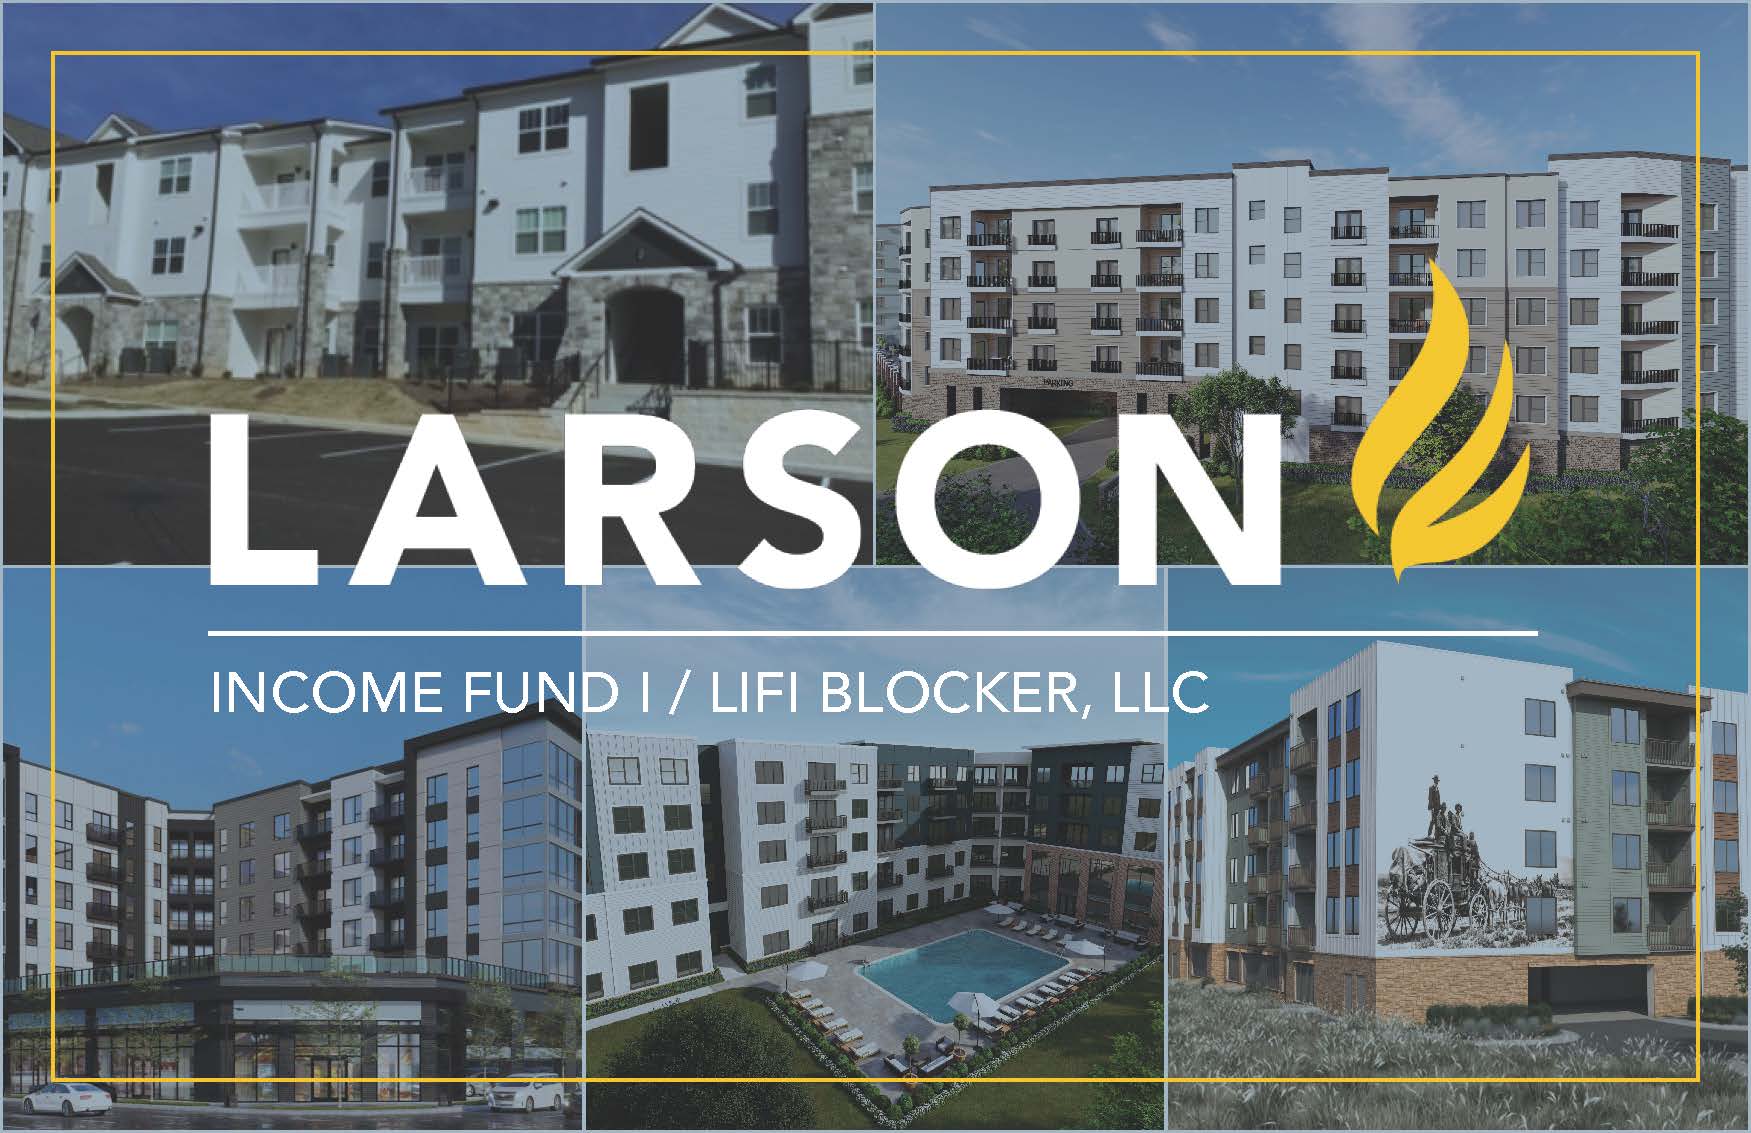 Larson Income Fund I, LLC & LIFI Blocker, LLC